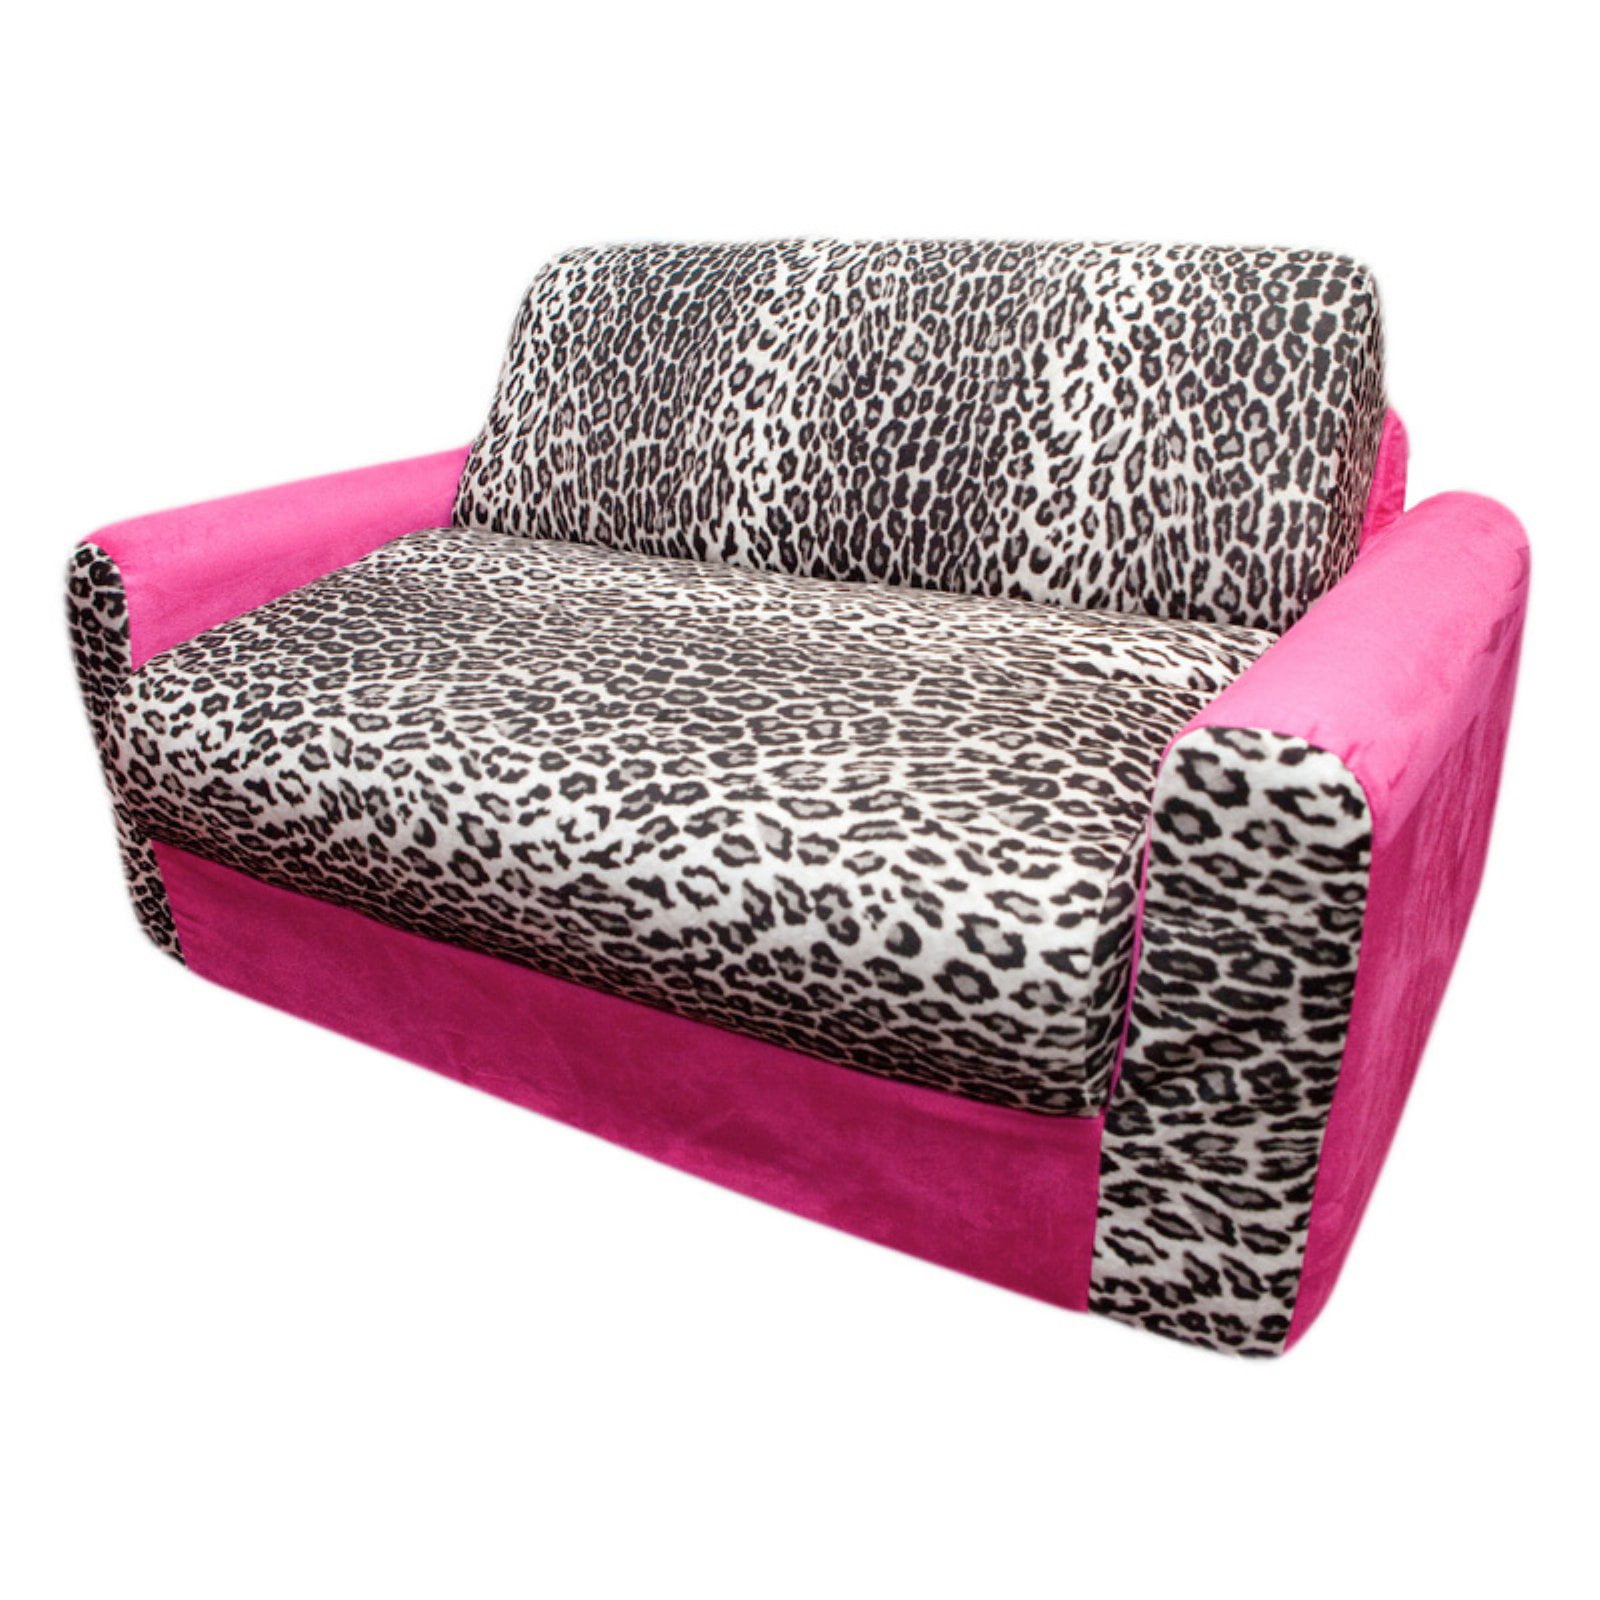  Fun  Furnishings Pink Leopard Sofa  Sleeper with Pillows Walmart com 